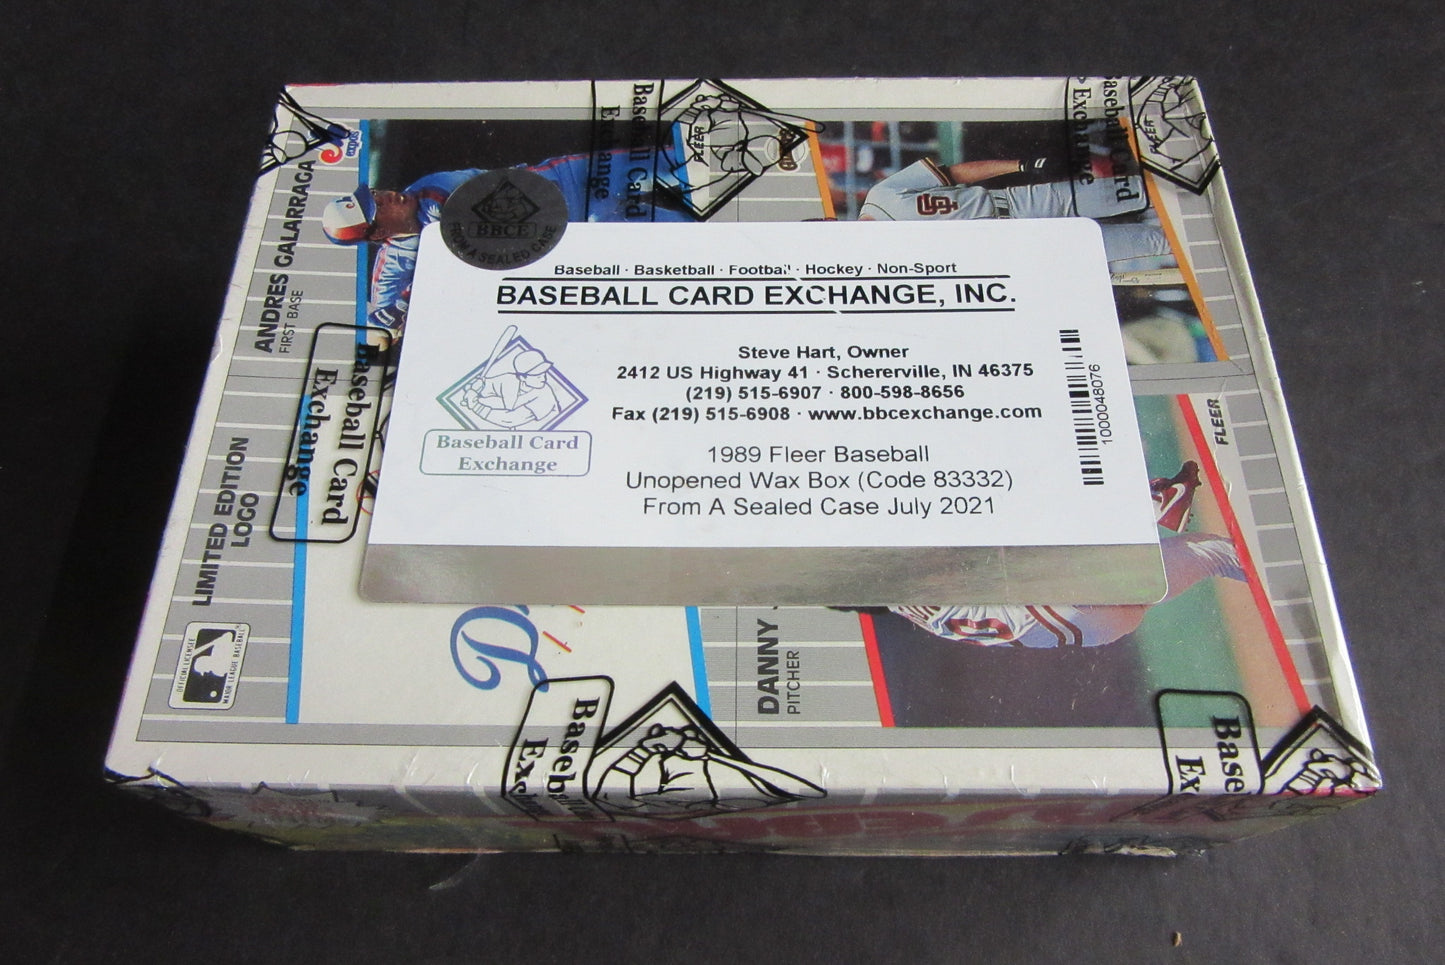 1989 Fleer Baseball Unopened Wax Box (FASC) (Code 83332)